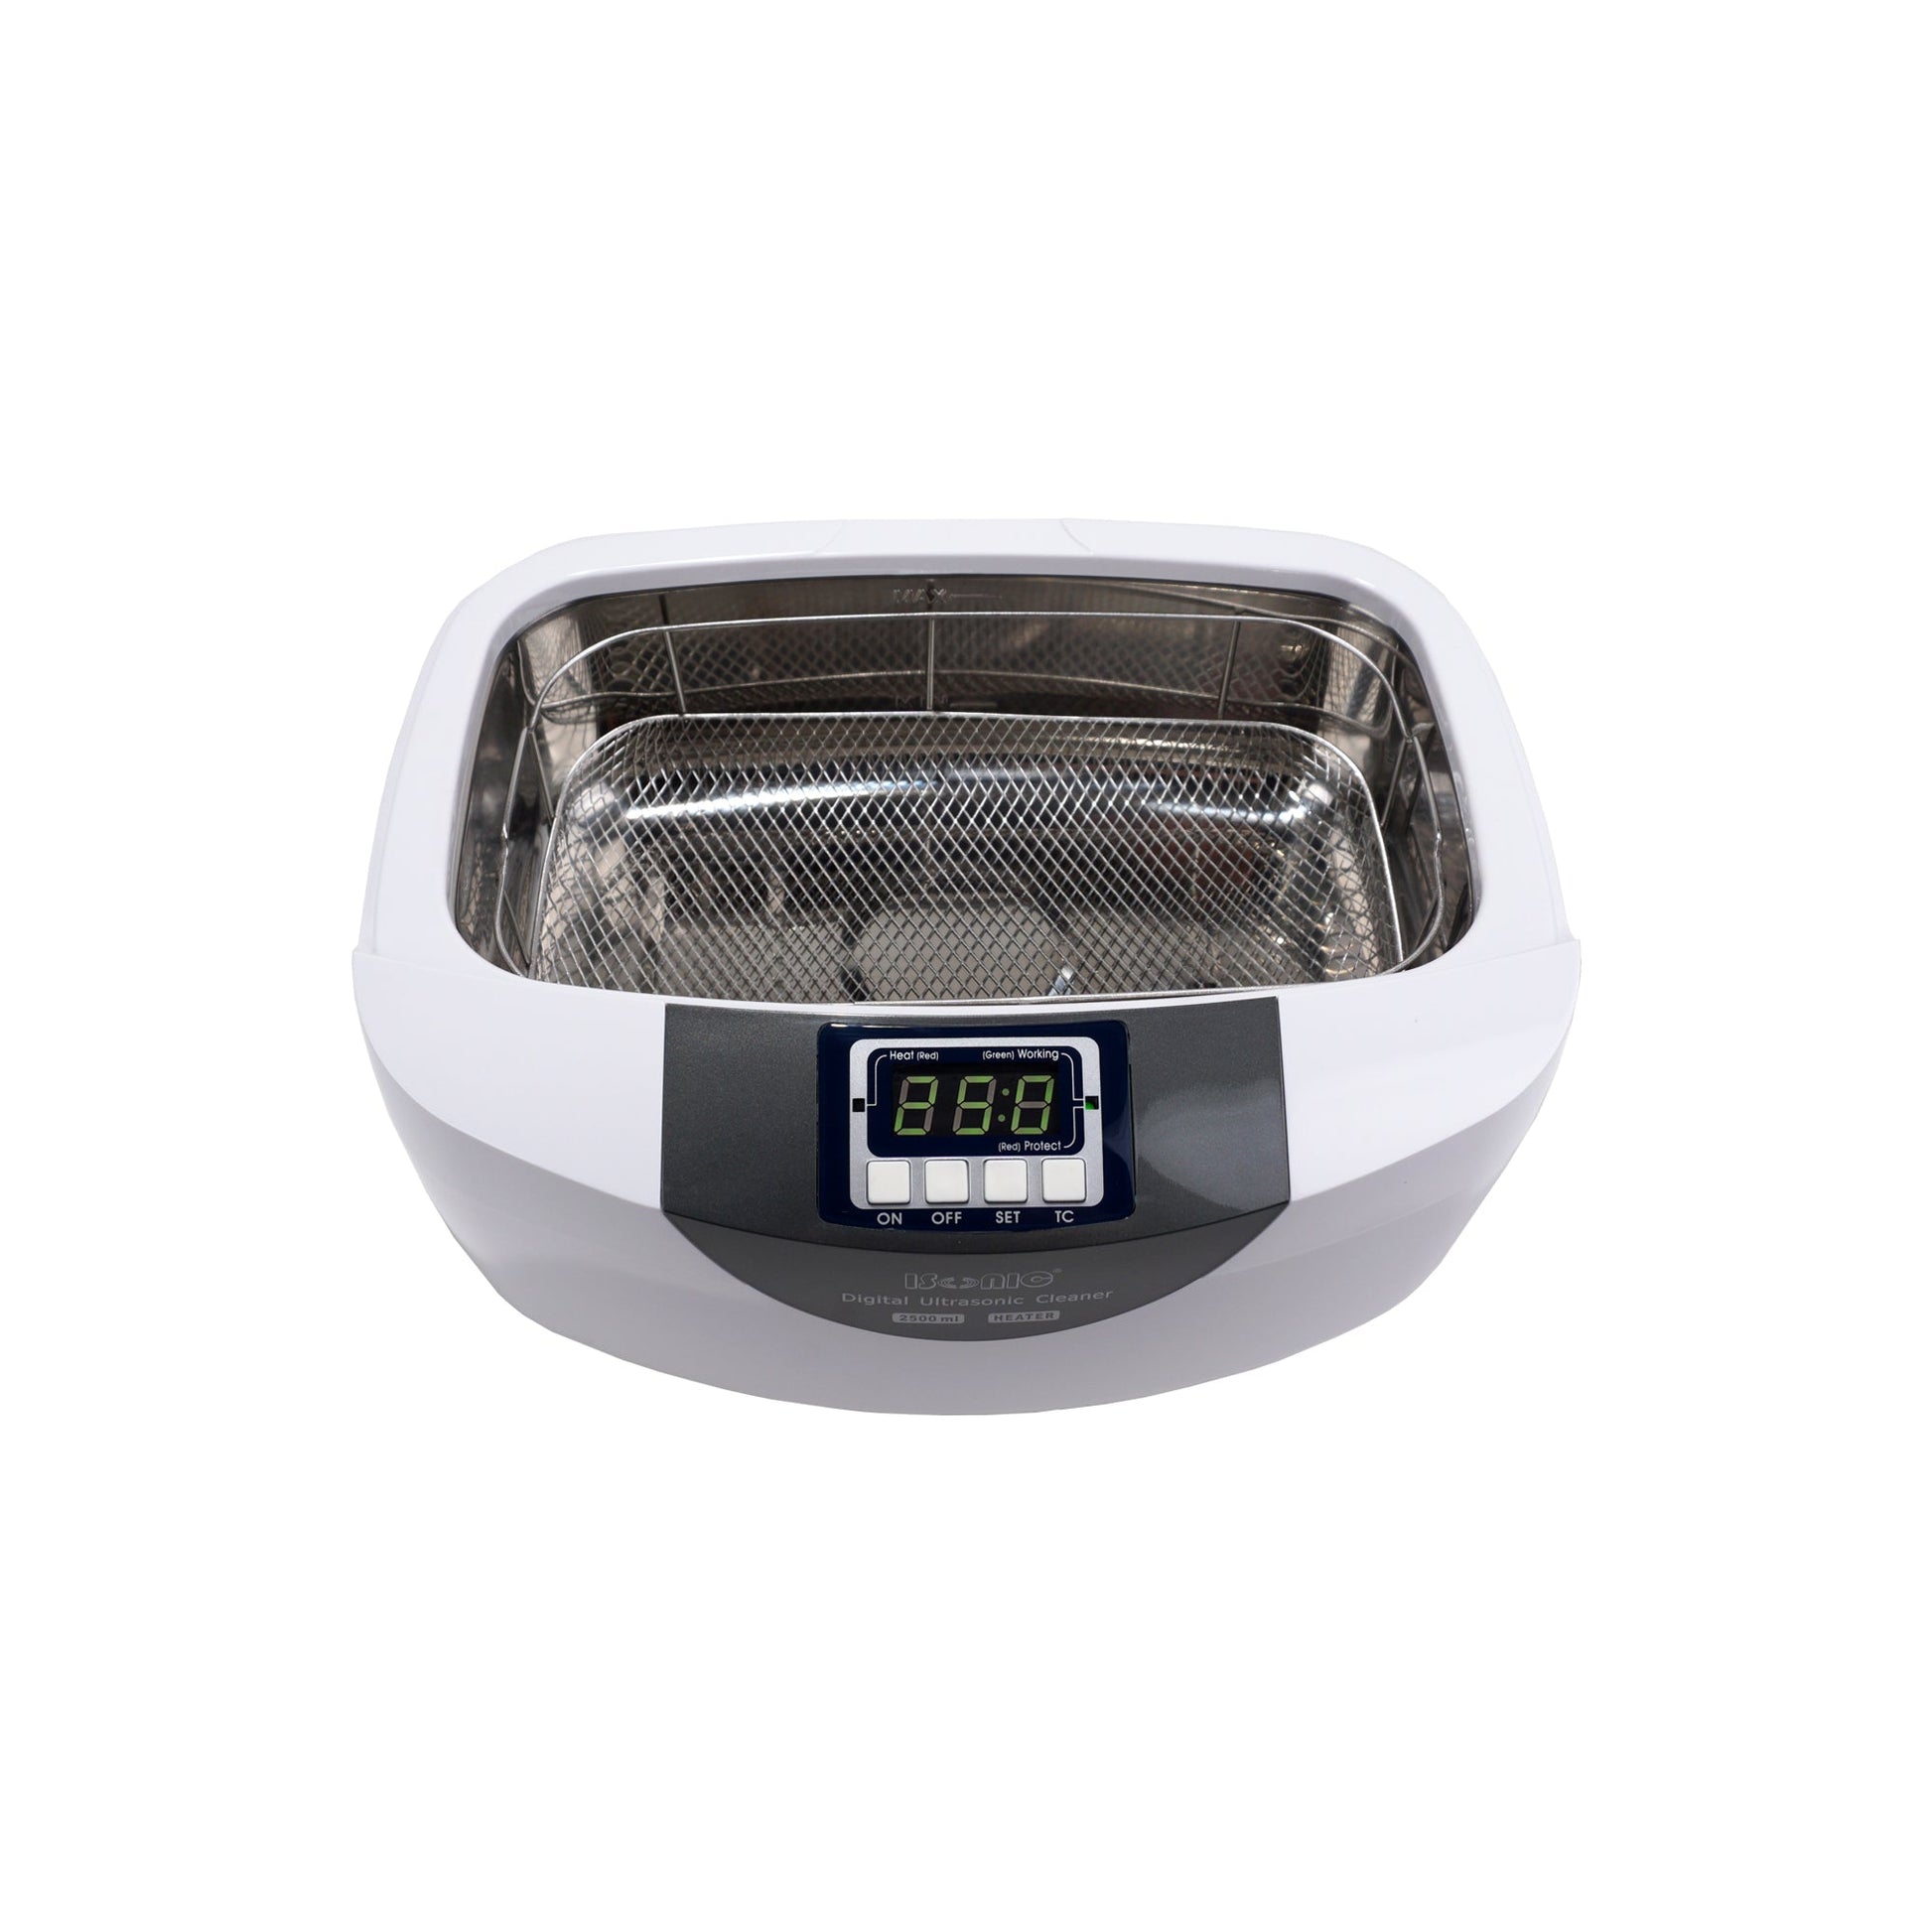 iSonic® Commercial Ultrasonic Cleaner P4820-WPB25, 2.6Qt/2.5L, 110V,  25-minute timer 